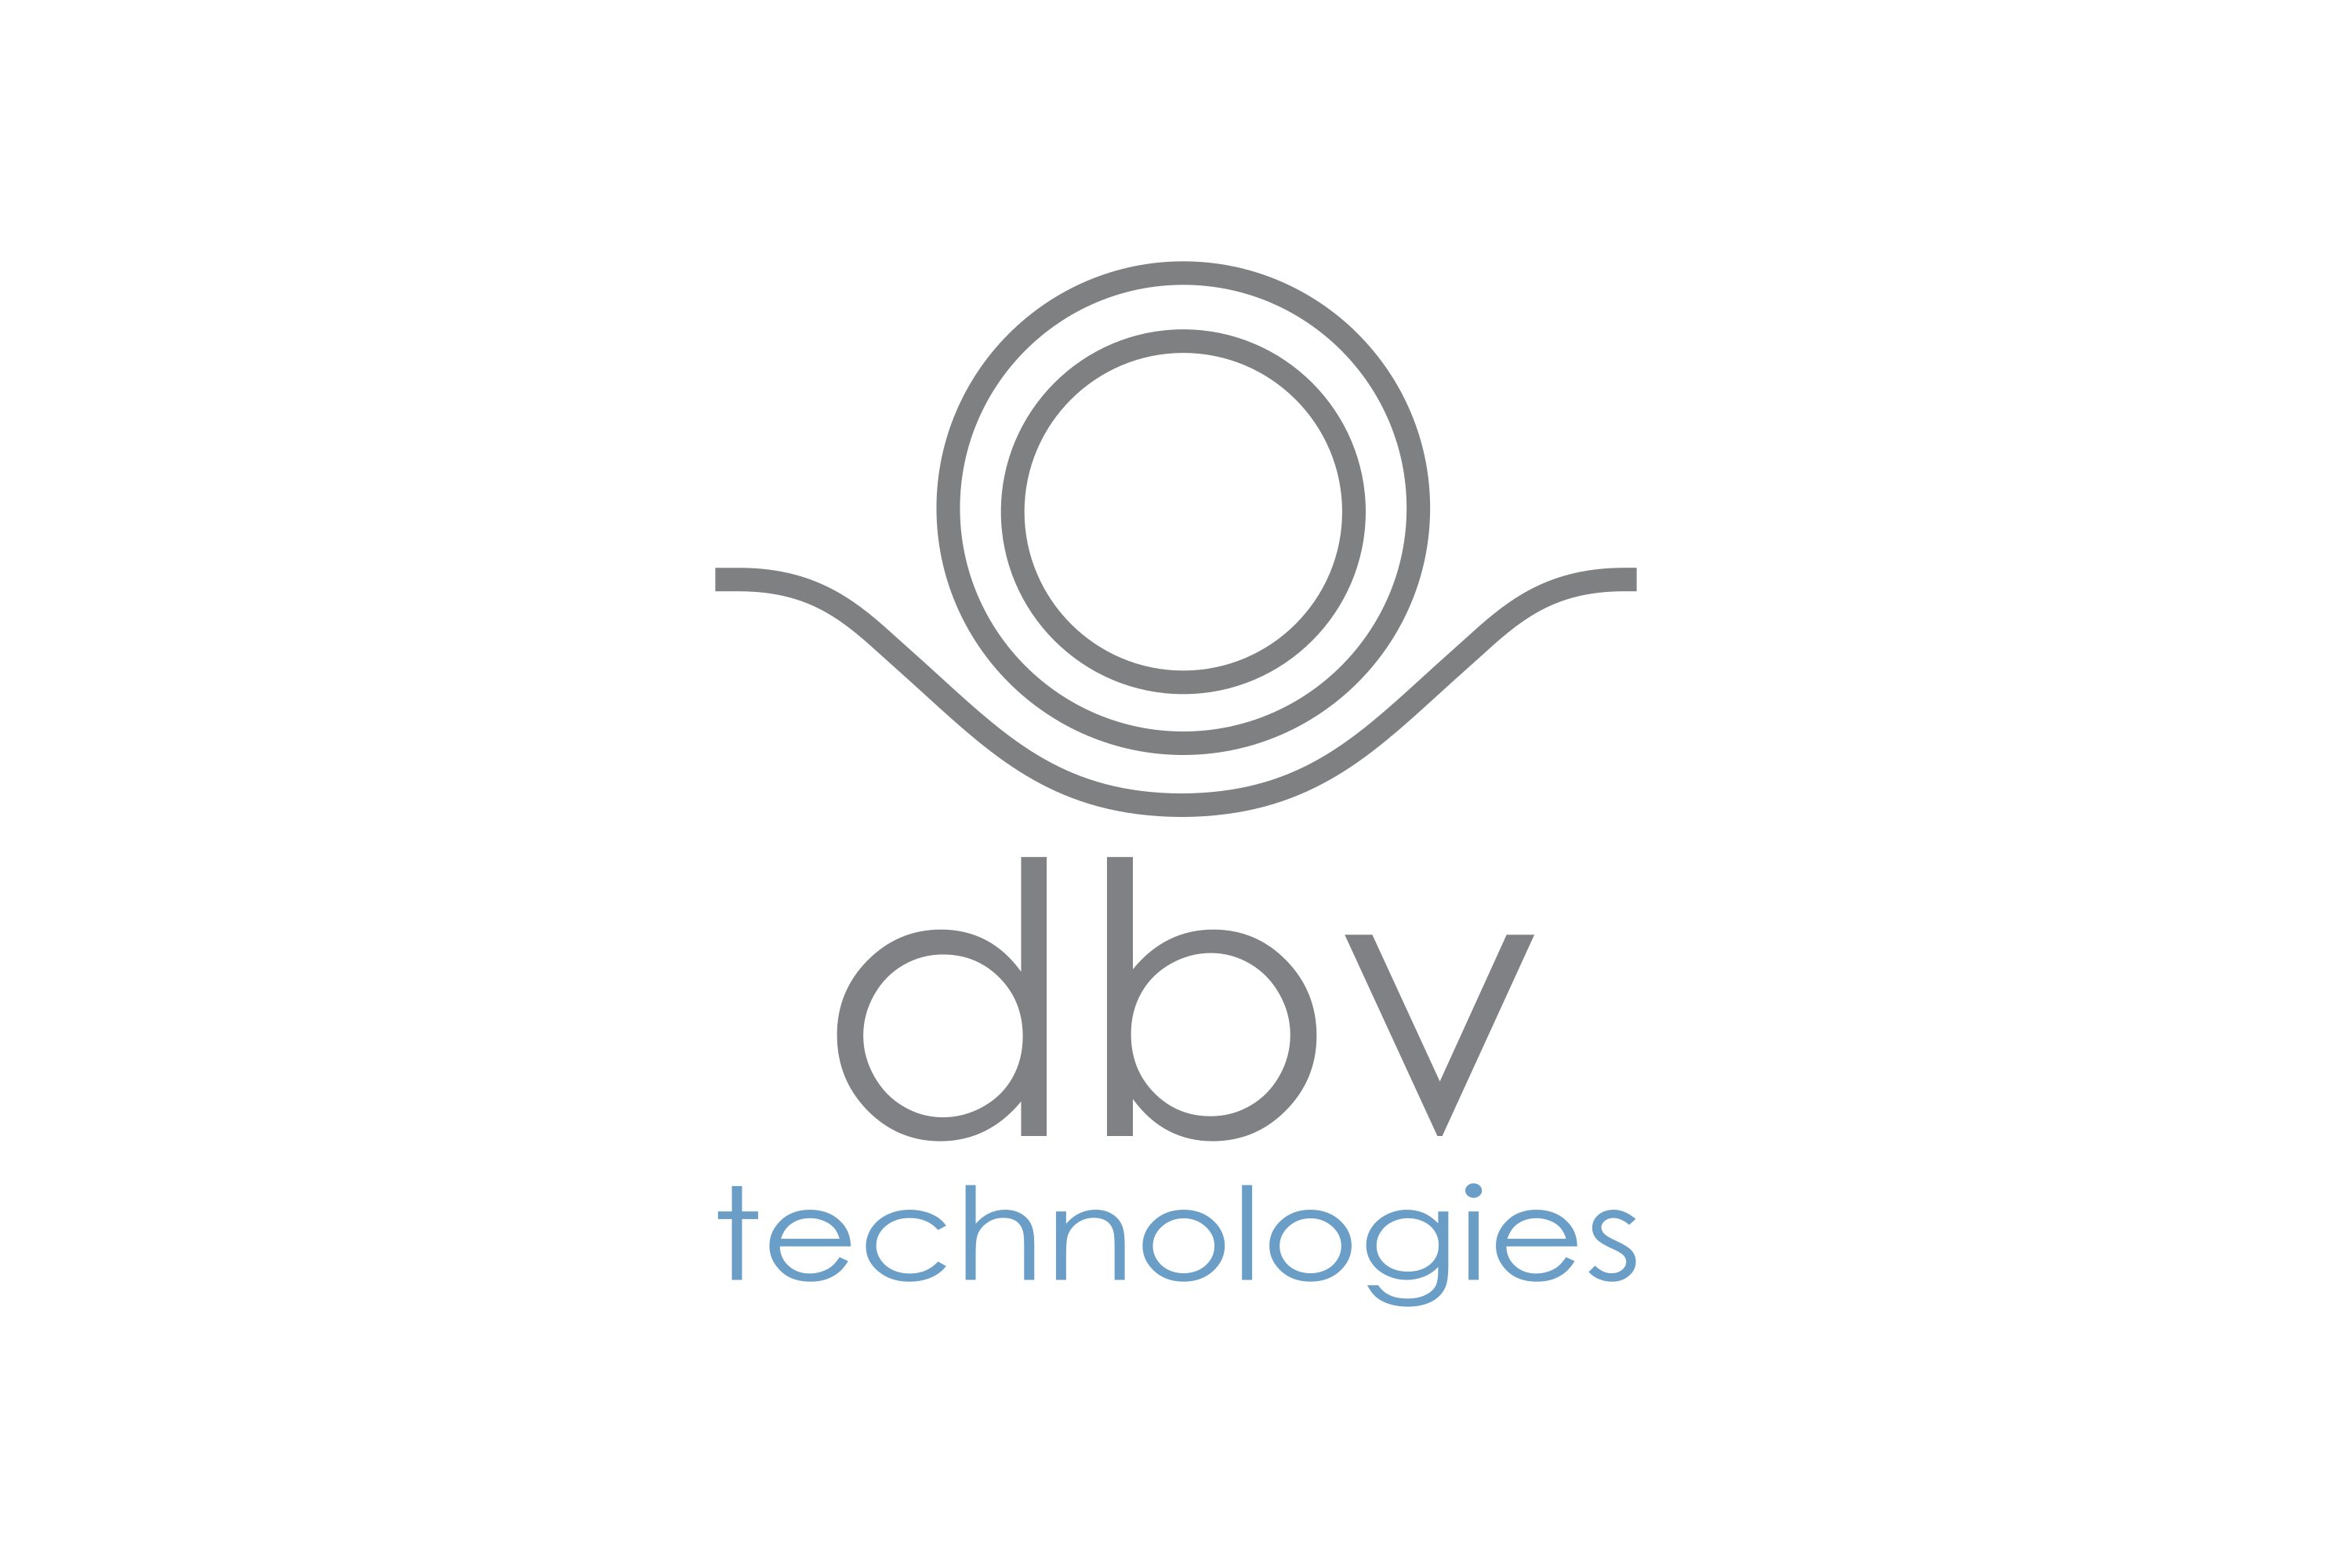 DBV Technologies Logo